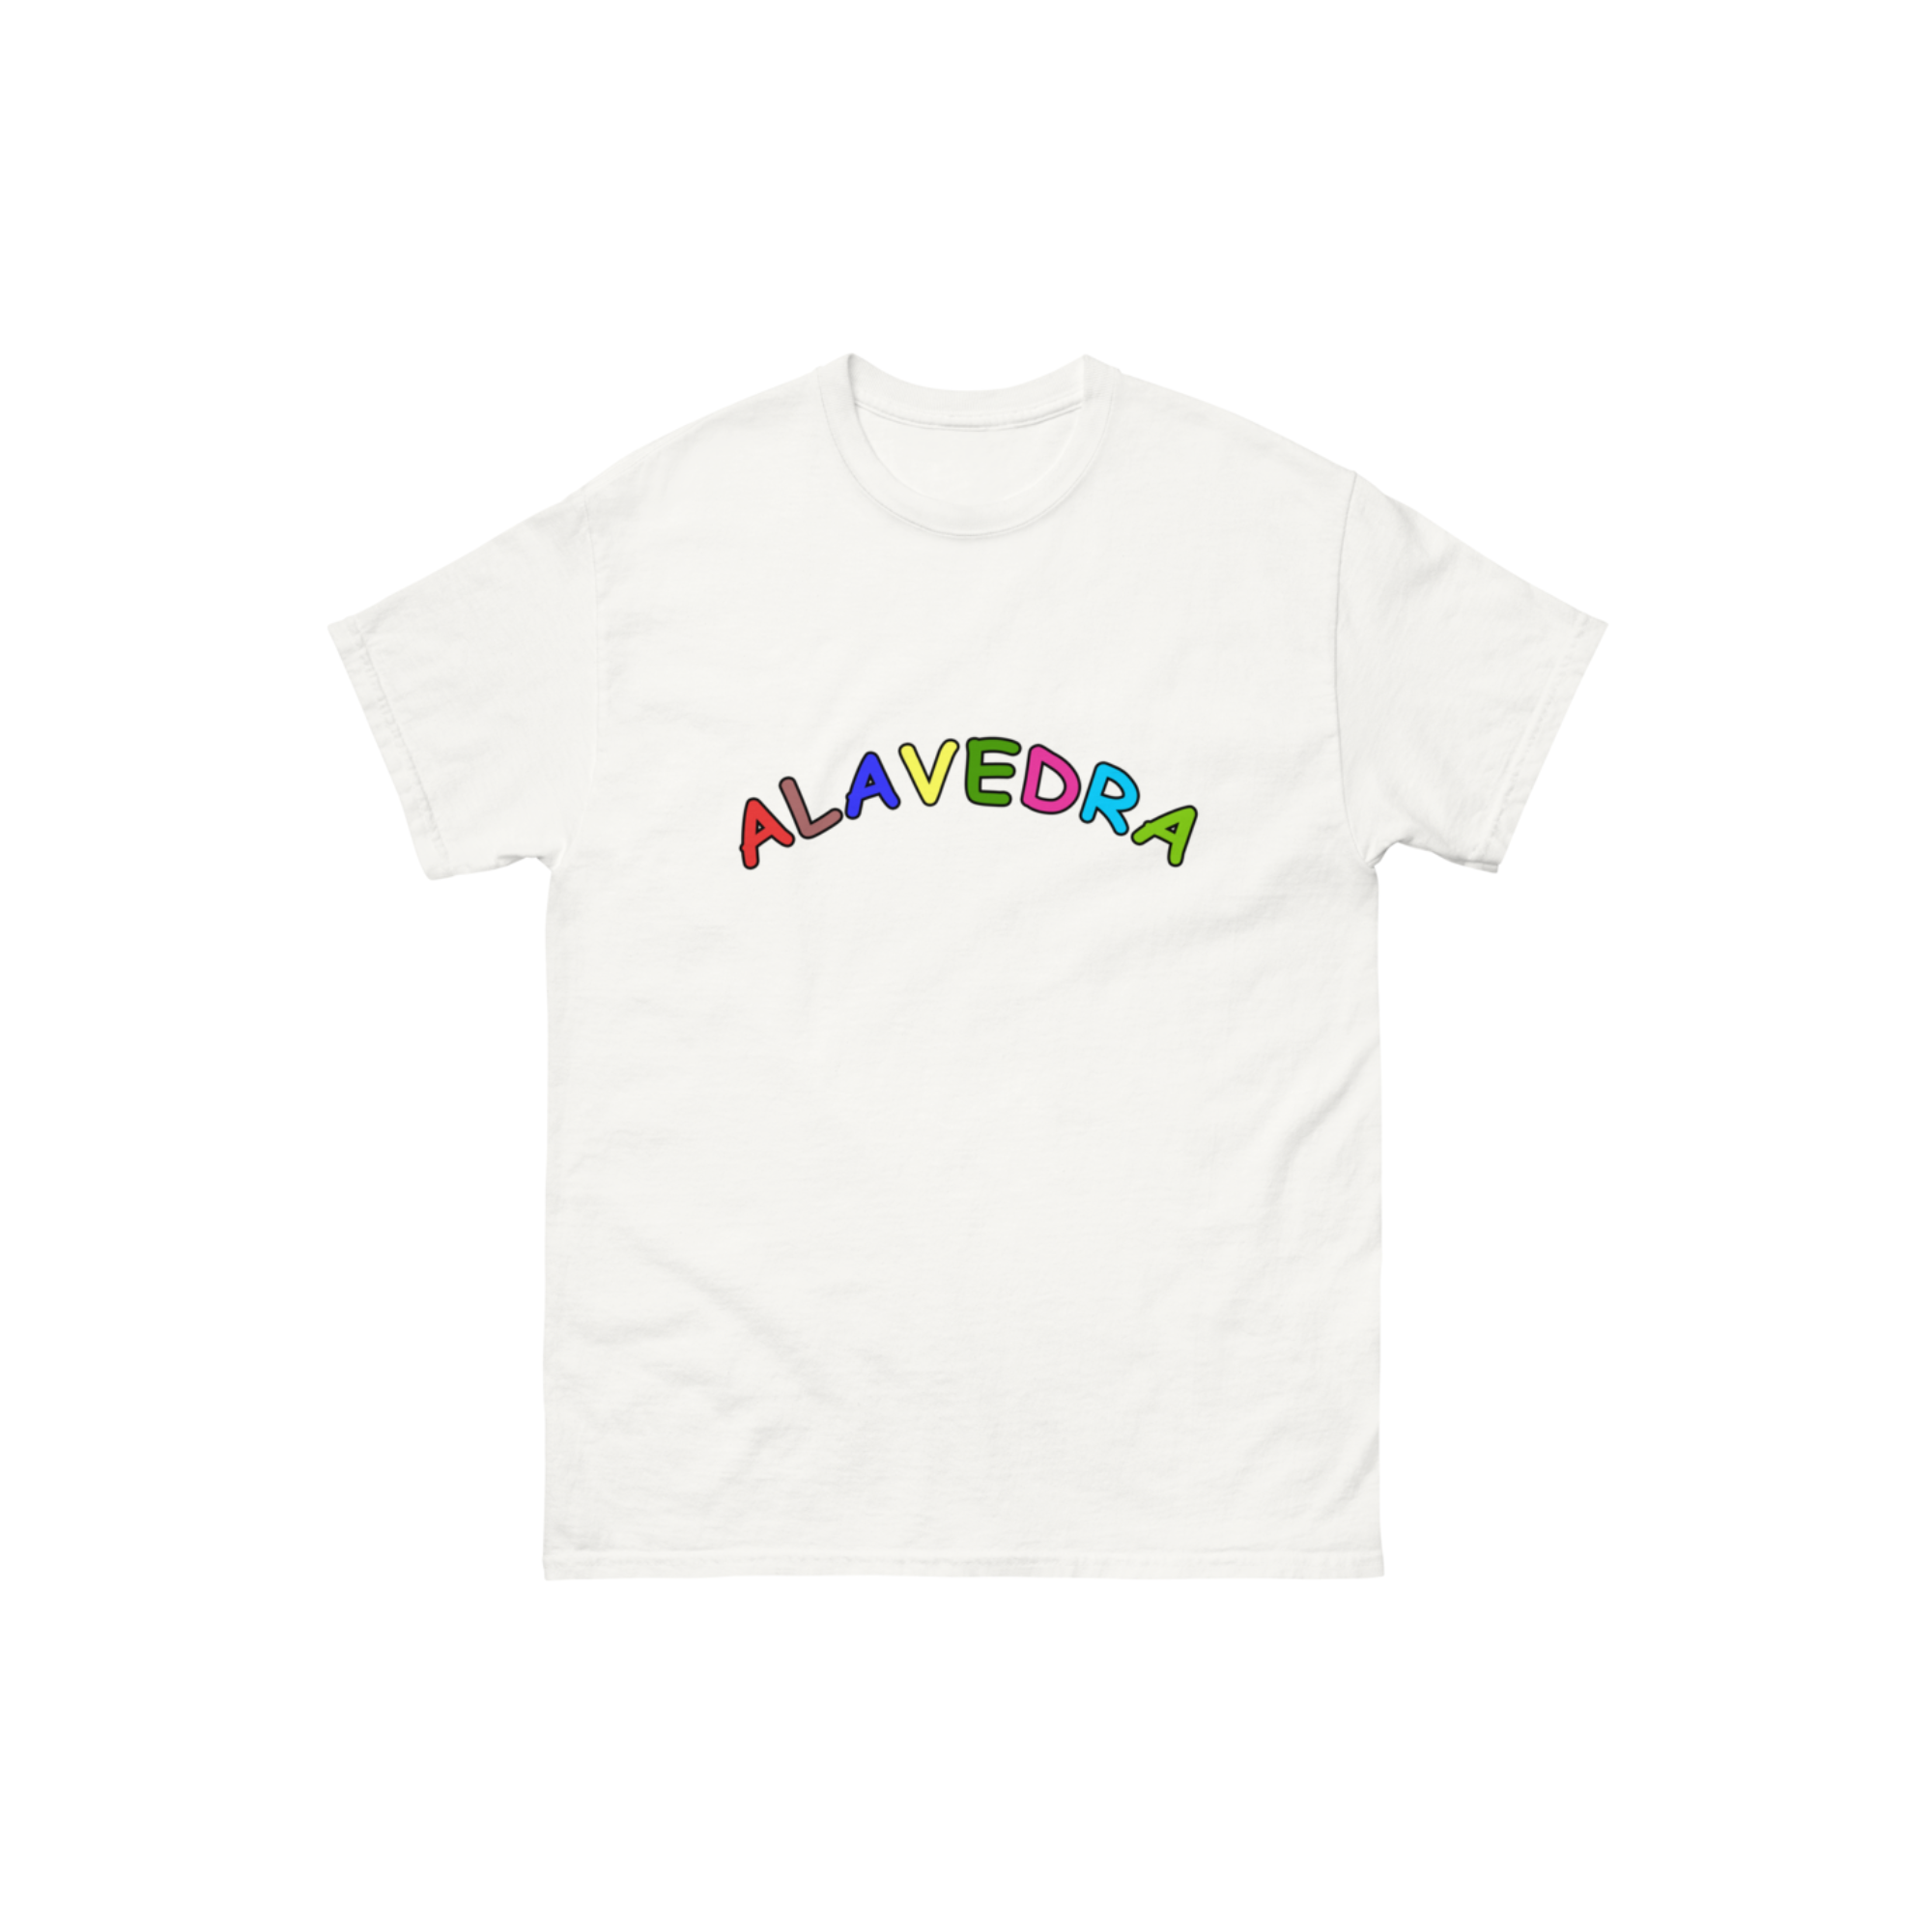 Alavedra - La Camiseta Original